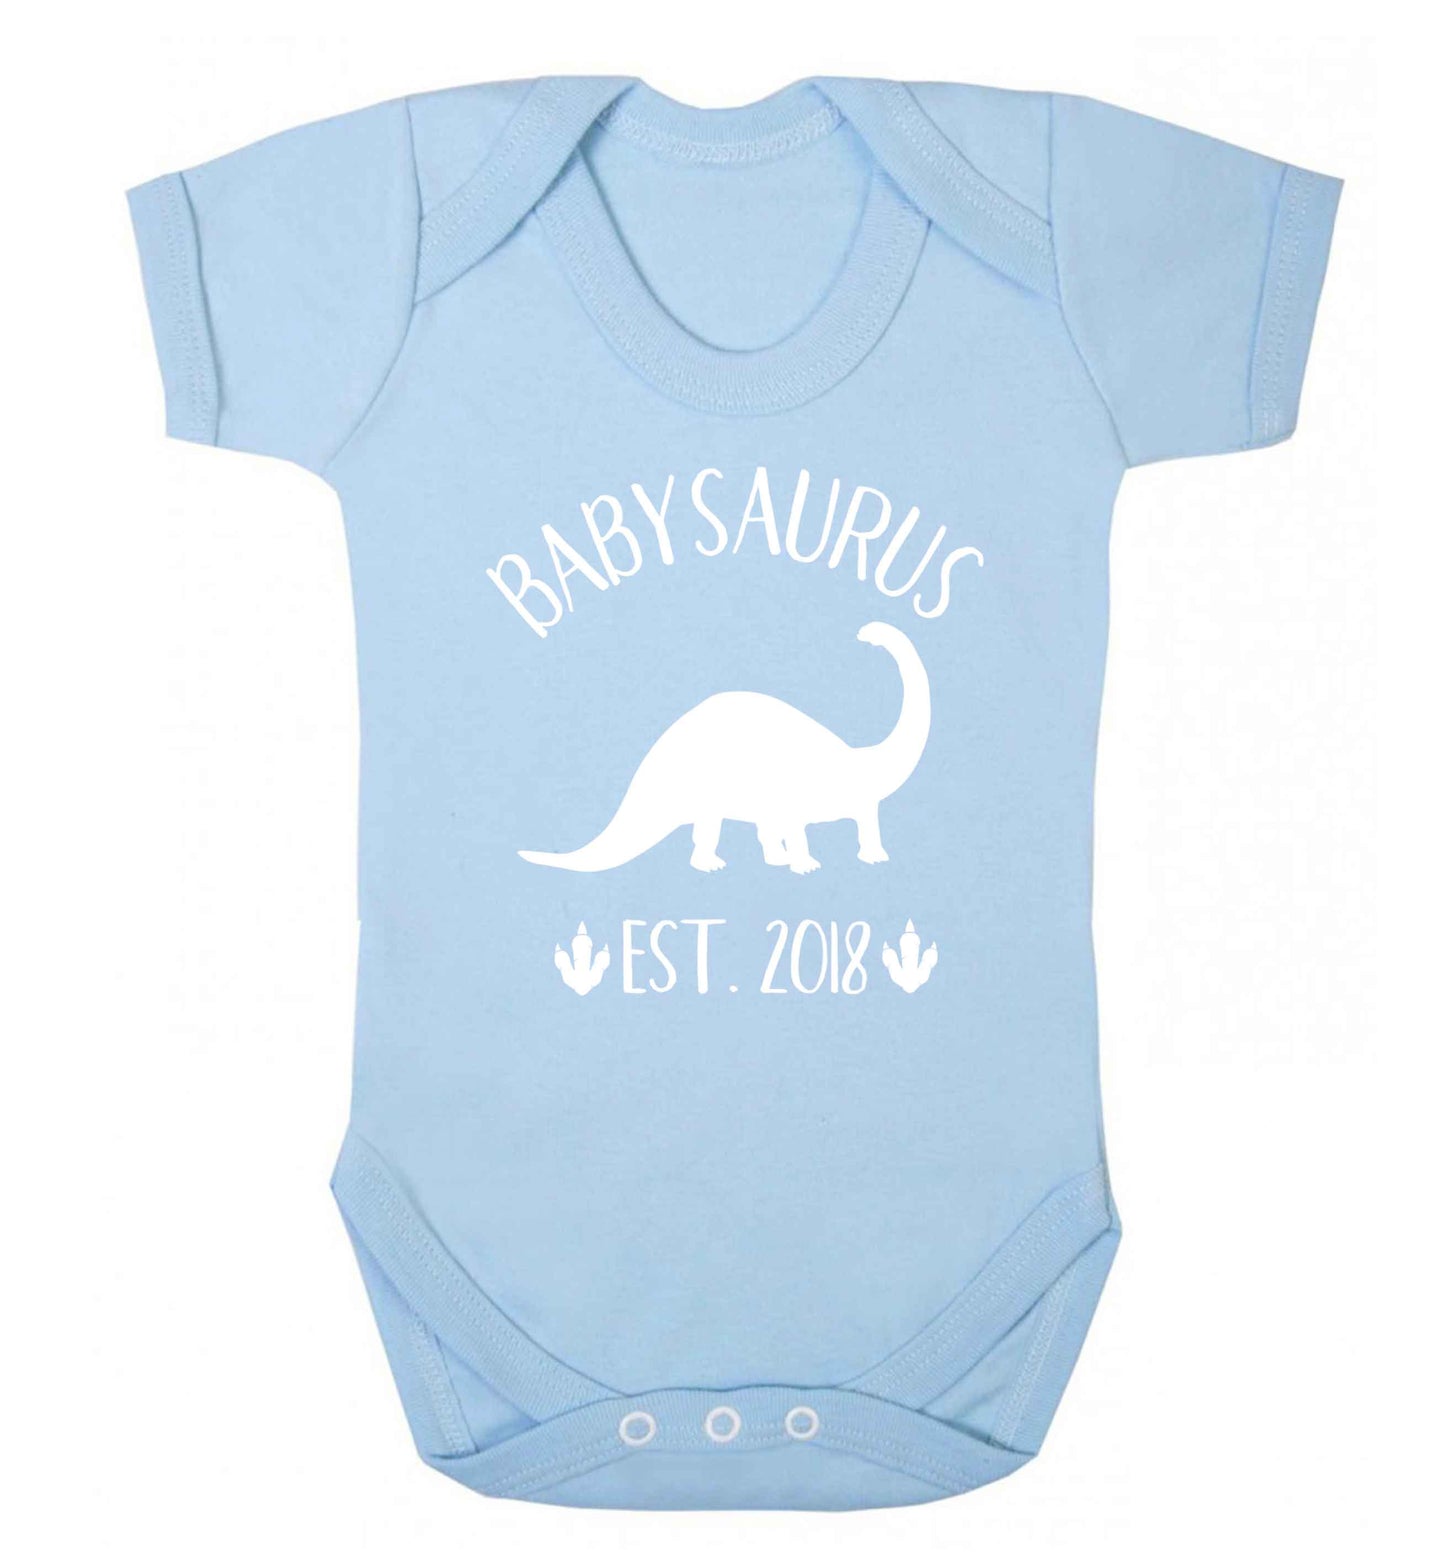 Personalised babysaurus since (custom date) Baby Vest pale blue 18-24 months